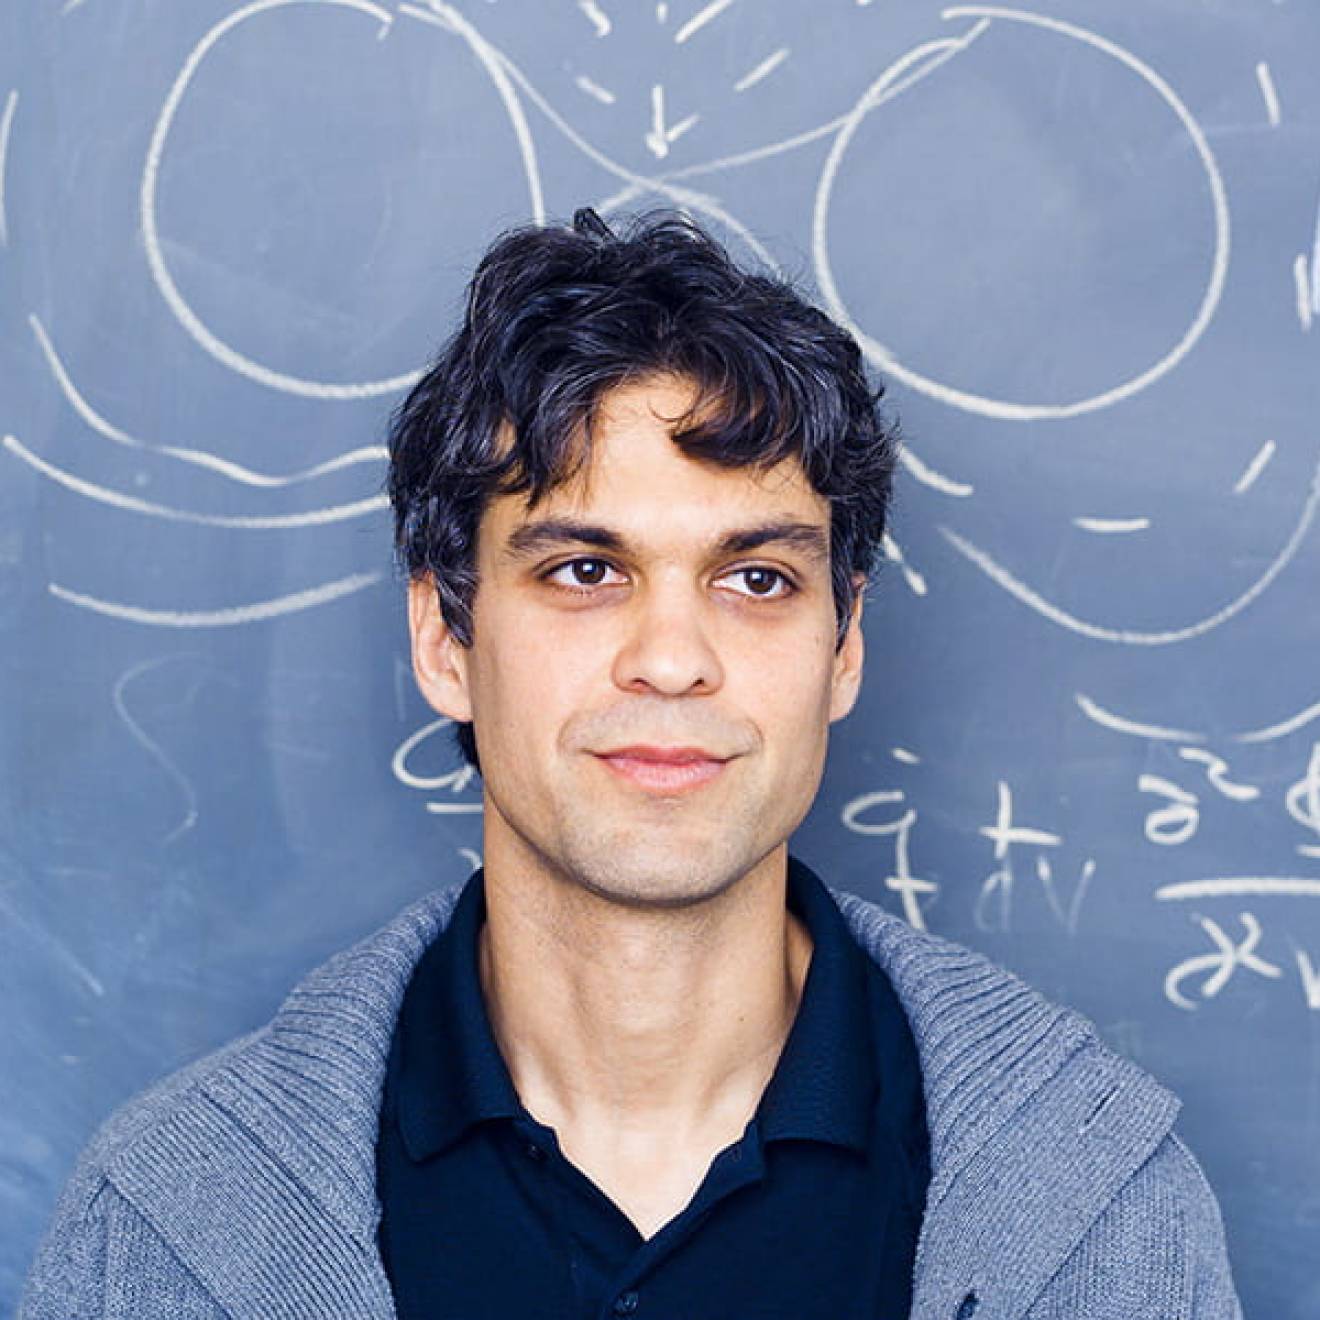 Enrico Ramirez-Ruiz in front of chalkboard